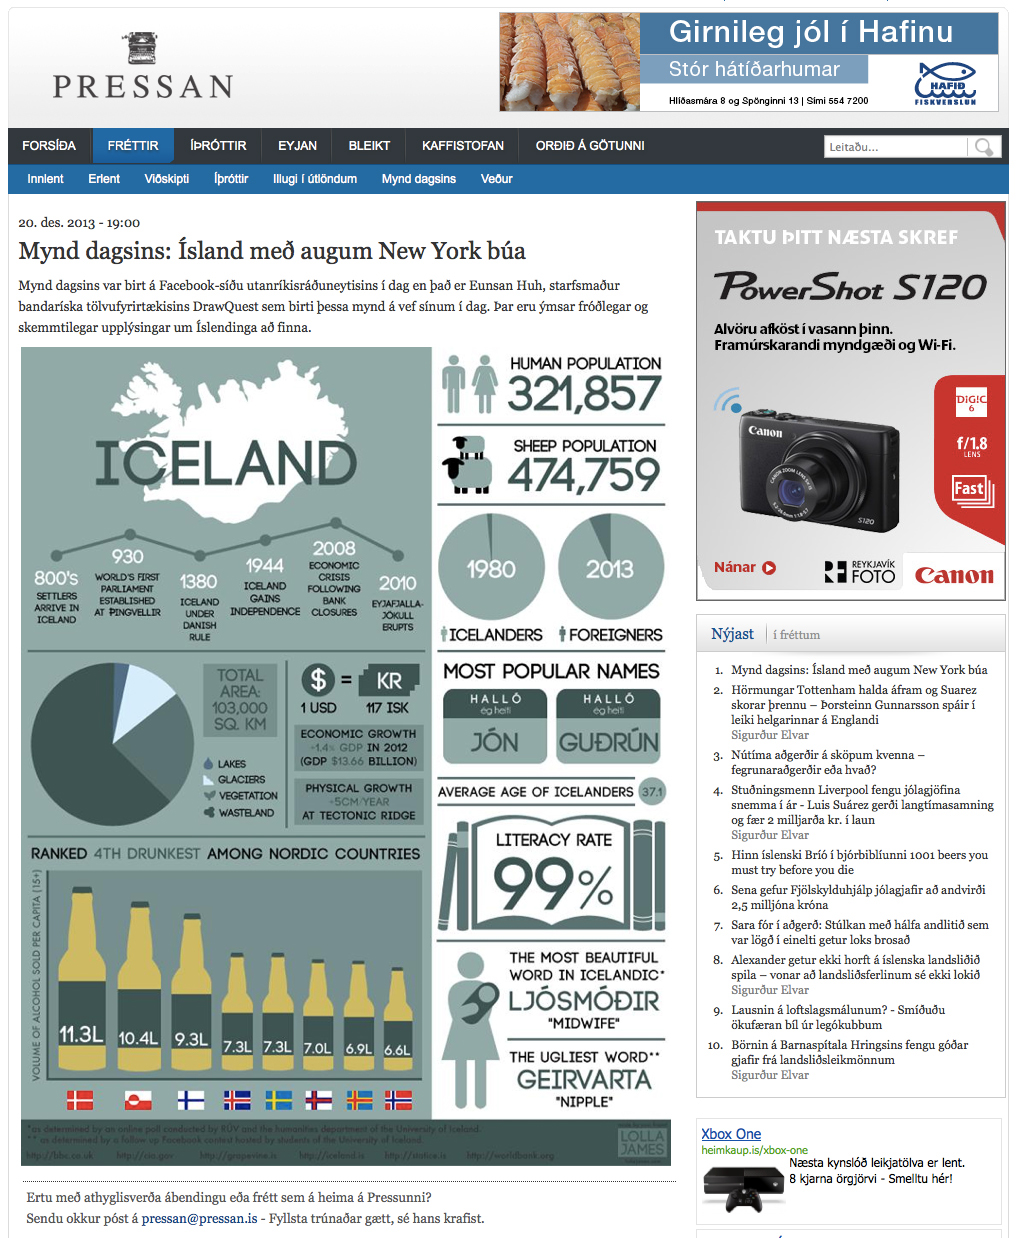 iceland Travel world infographic design information statistics map Europe Scandinavia